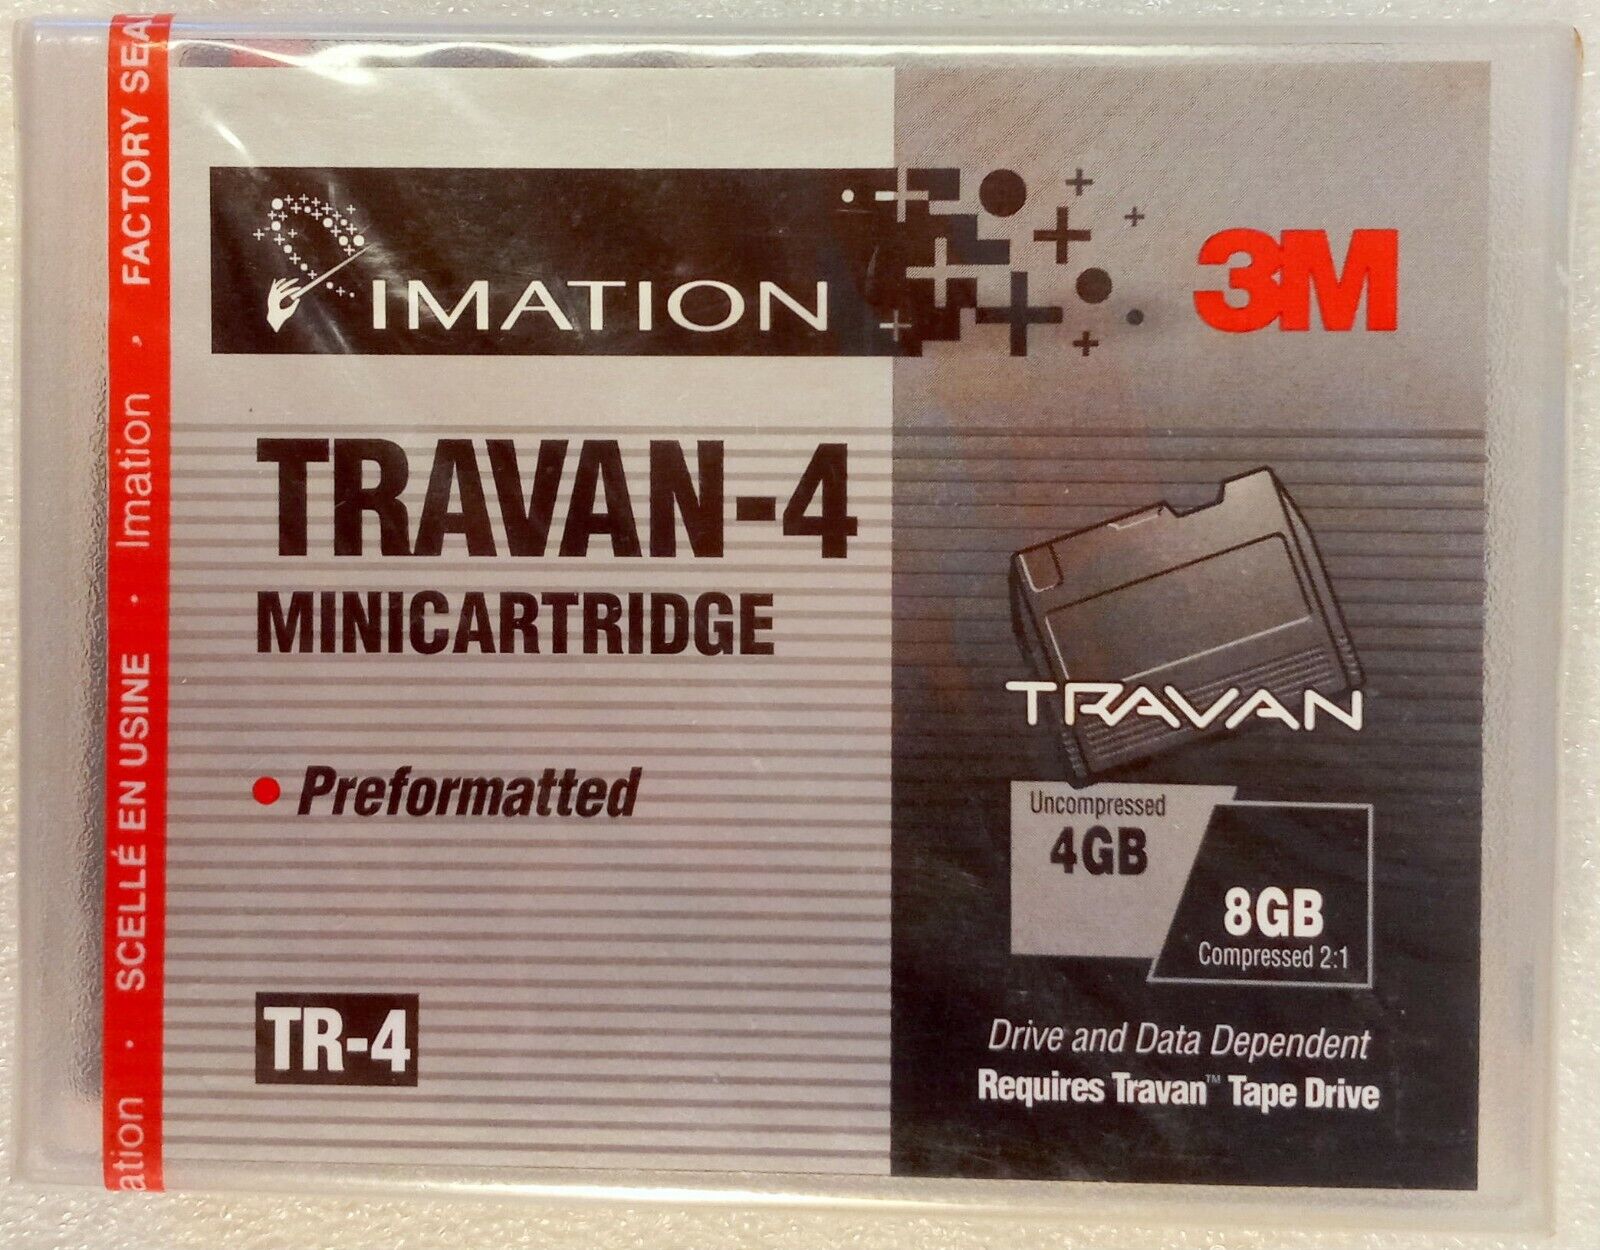 Imation Travan-4 Minicartridge Preformatted TR-4 , unopened case